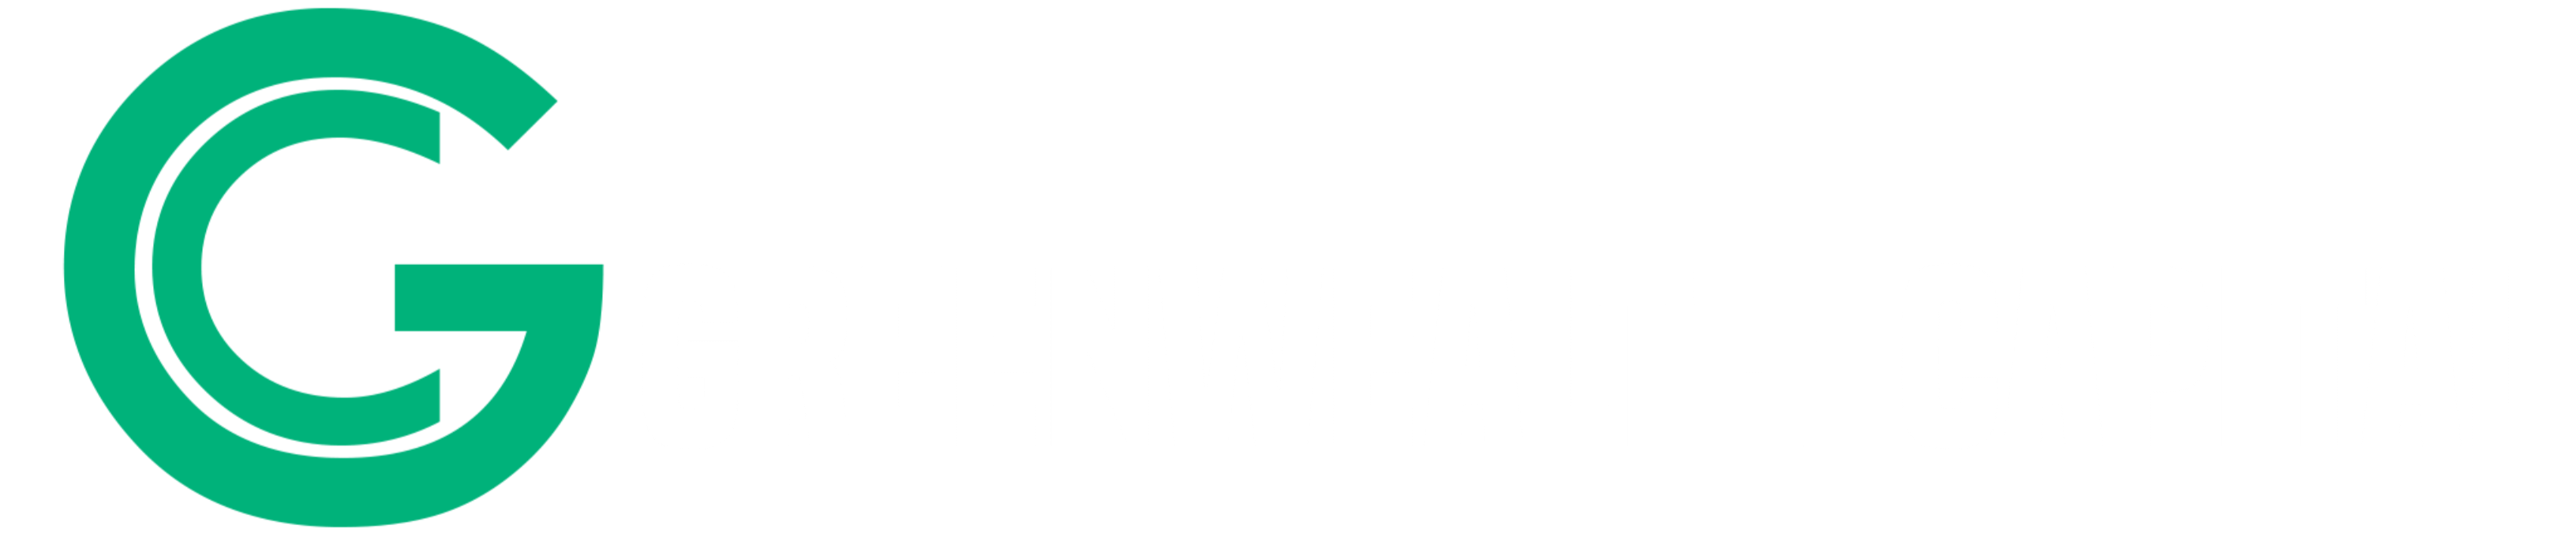 greenwealth-capital.com